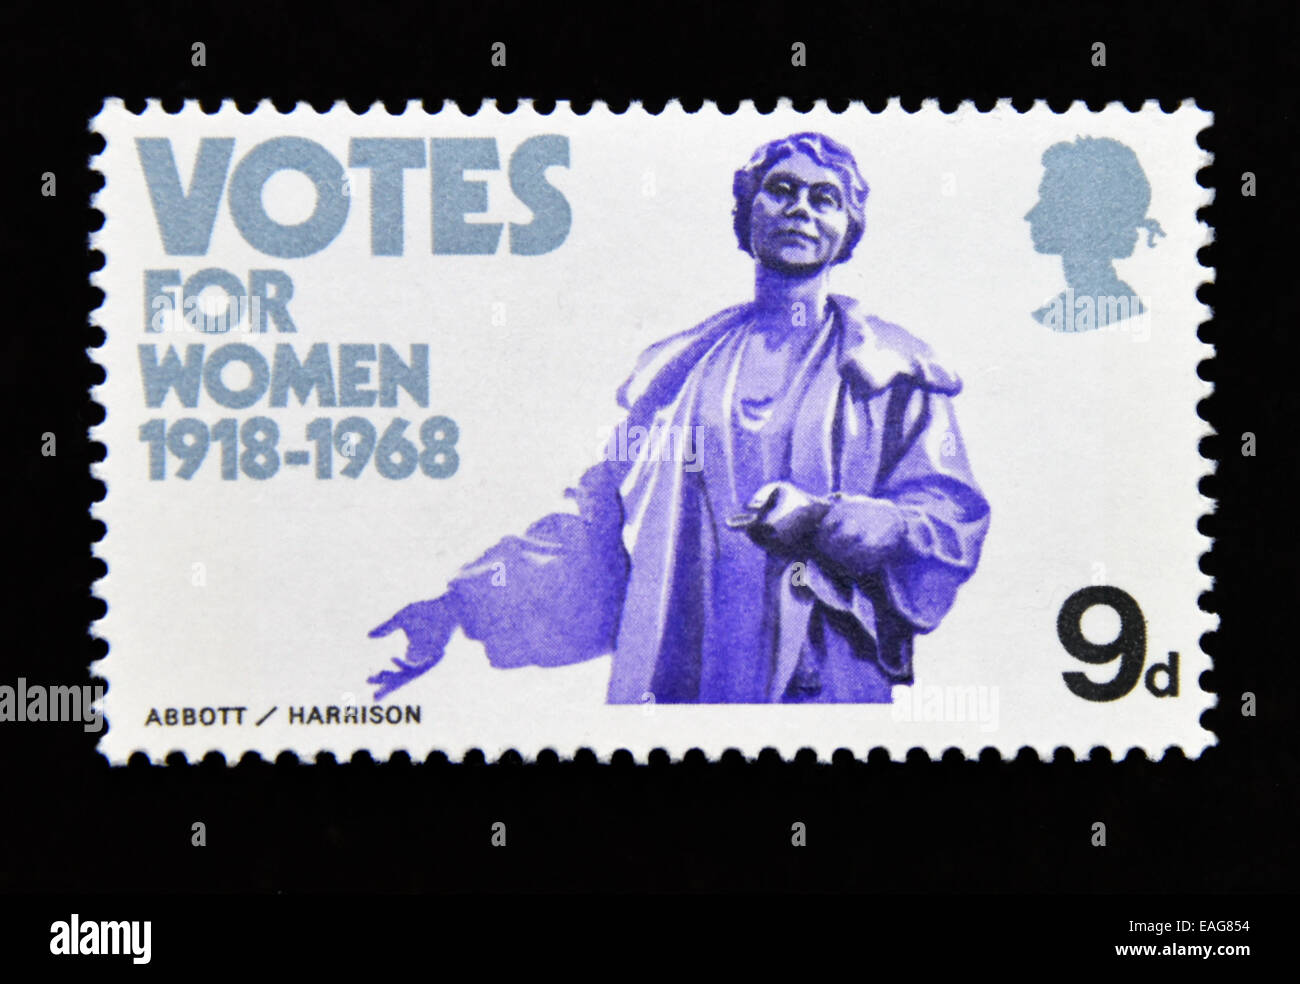 Francobollo. La Gran Bretagna. La regina Elisabetta II. British anniversari. Voti per le donne 1918-1968. 9d. Foto Stock